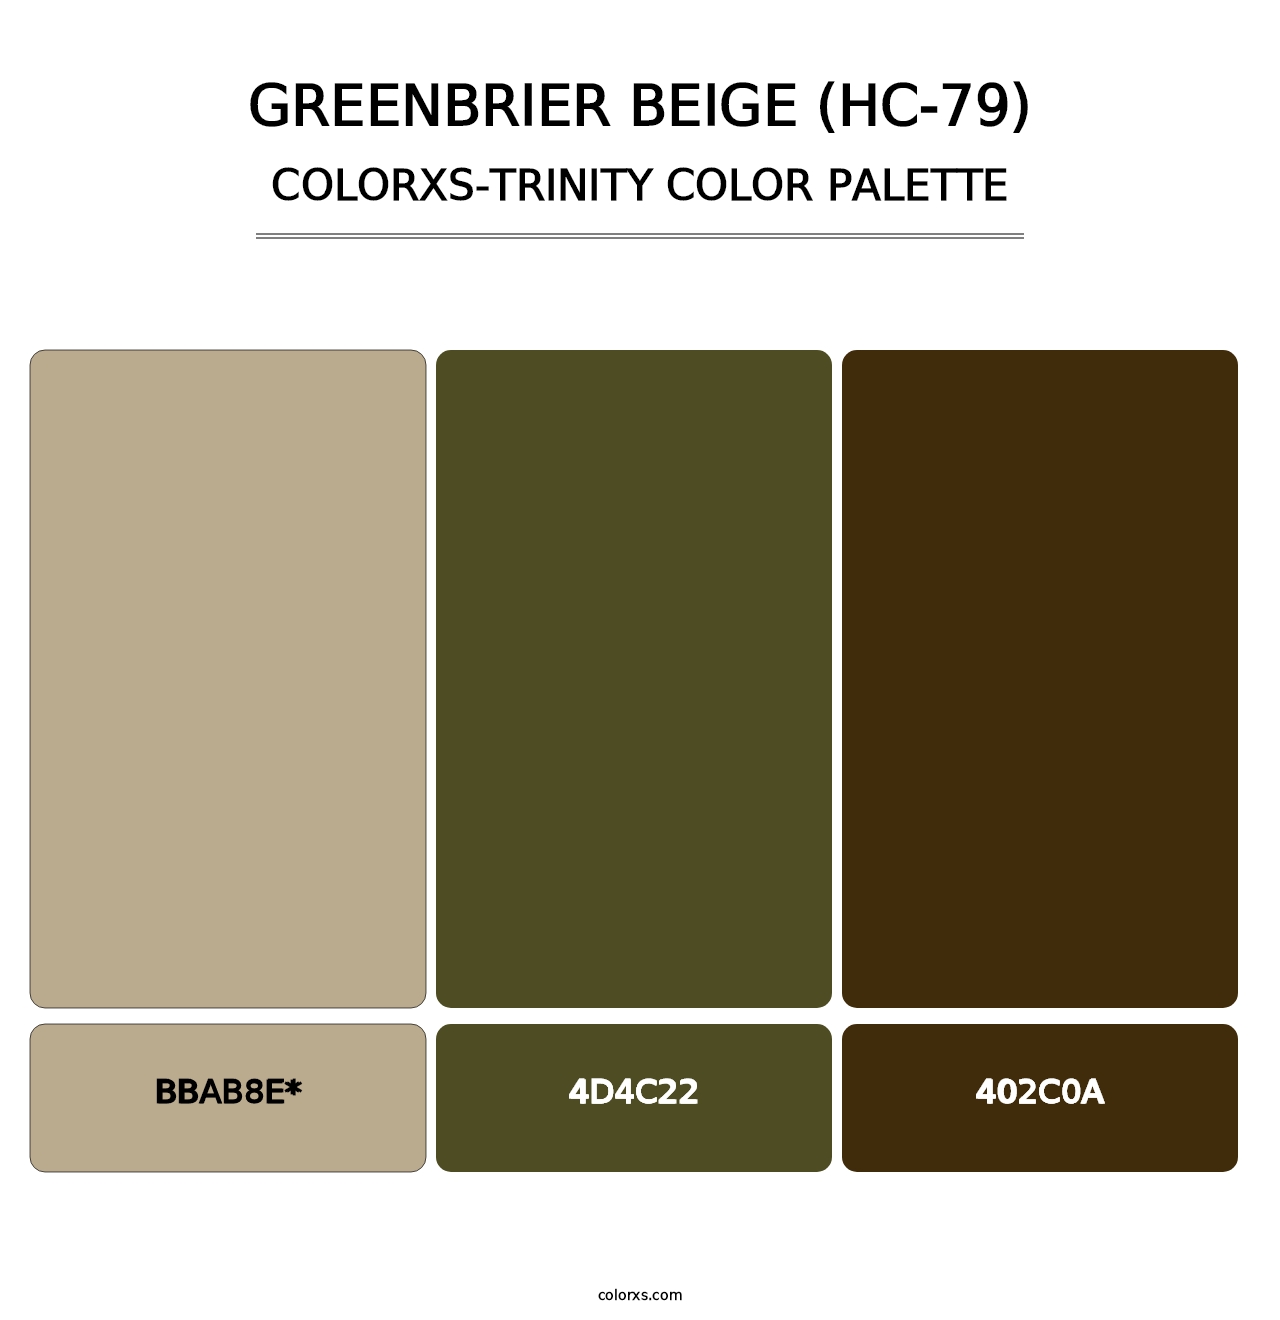 Greenbrier Beige (HC-79) - Colorxs Trinity Palette